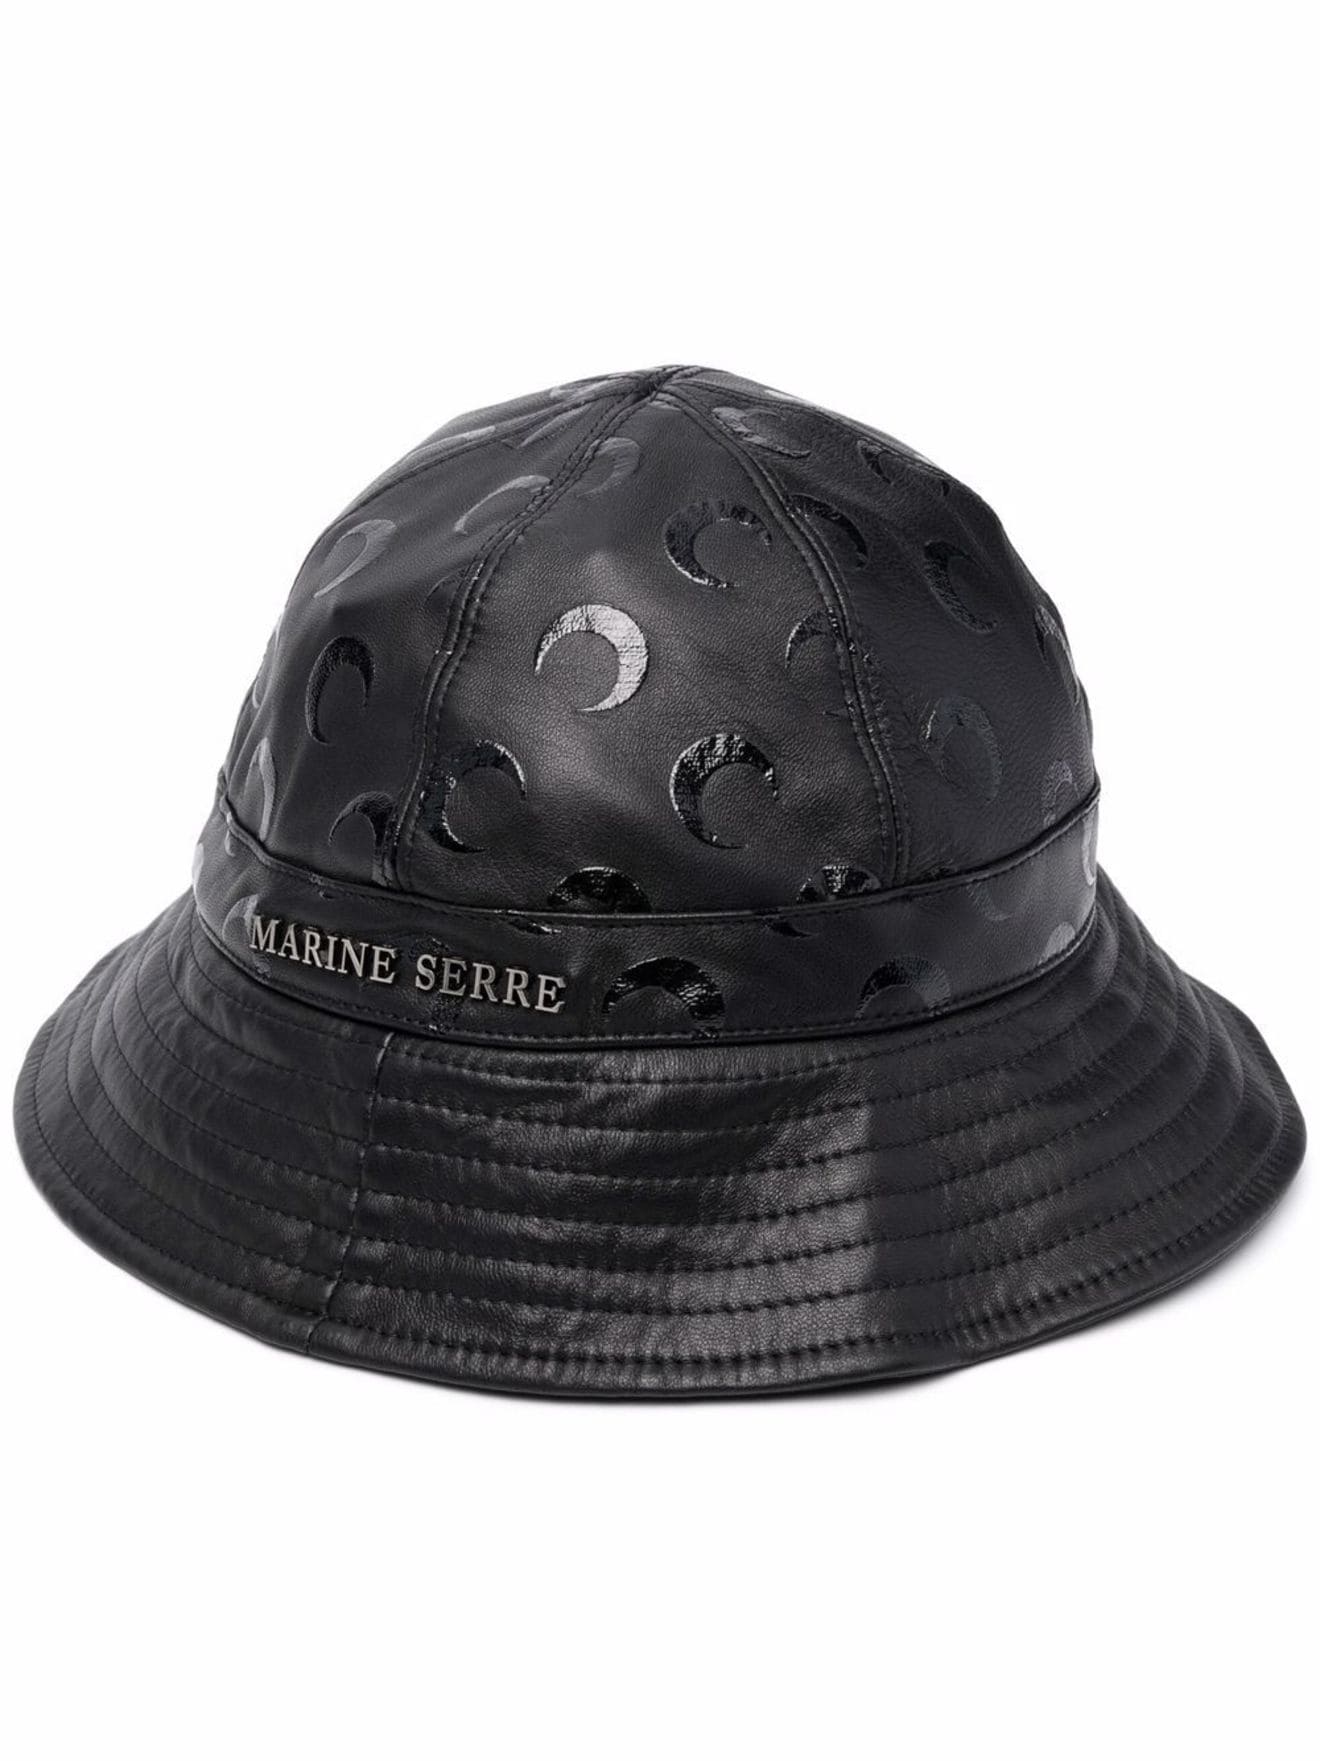 Marine Serre all-over crescent moon bucket hat black | MODES